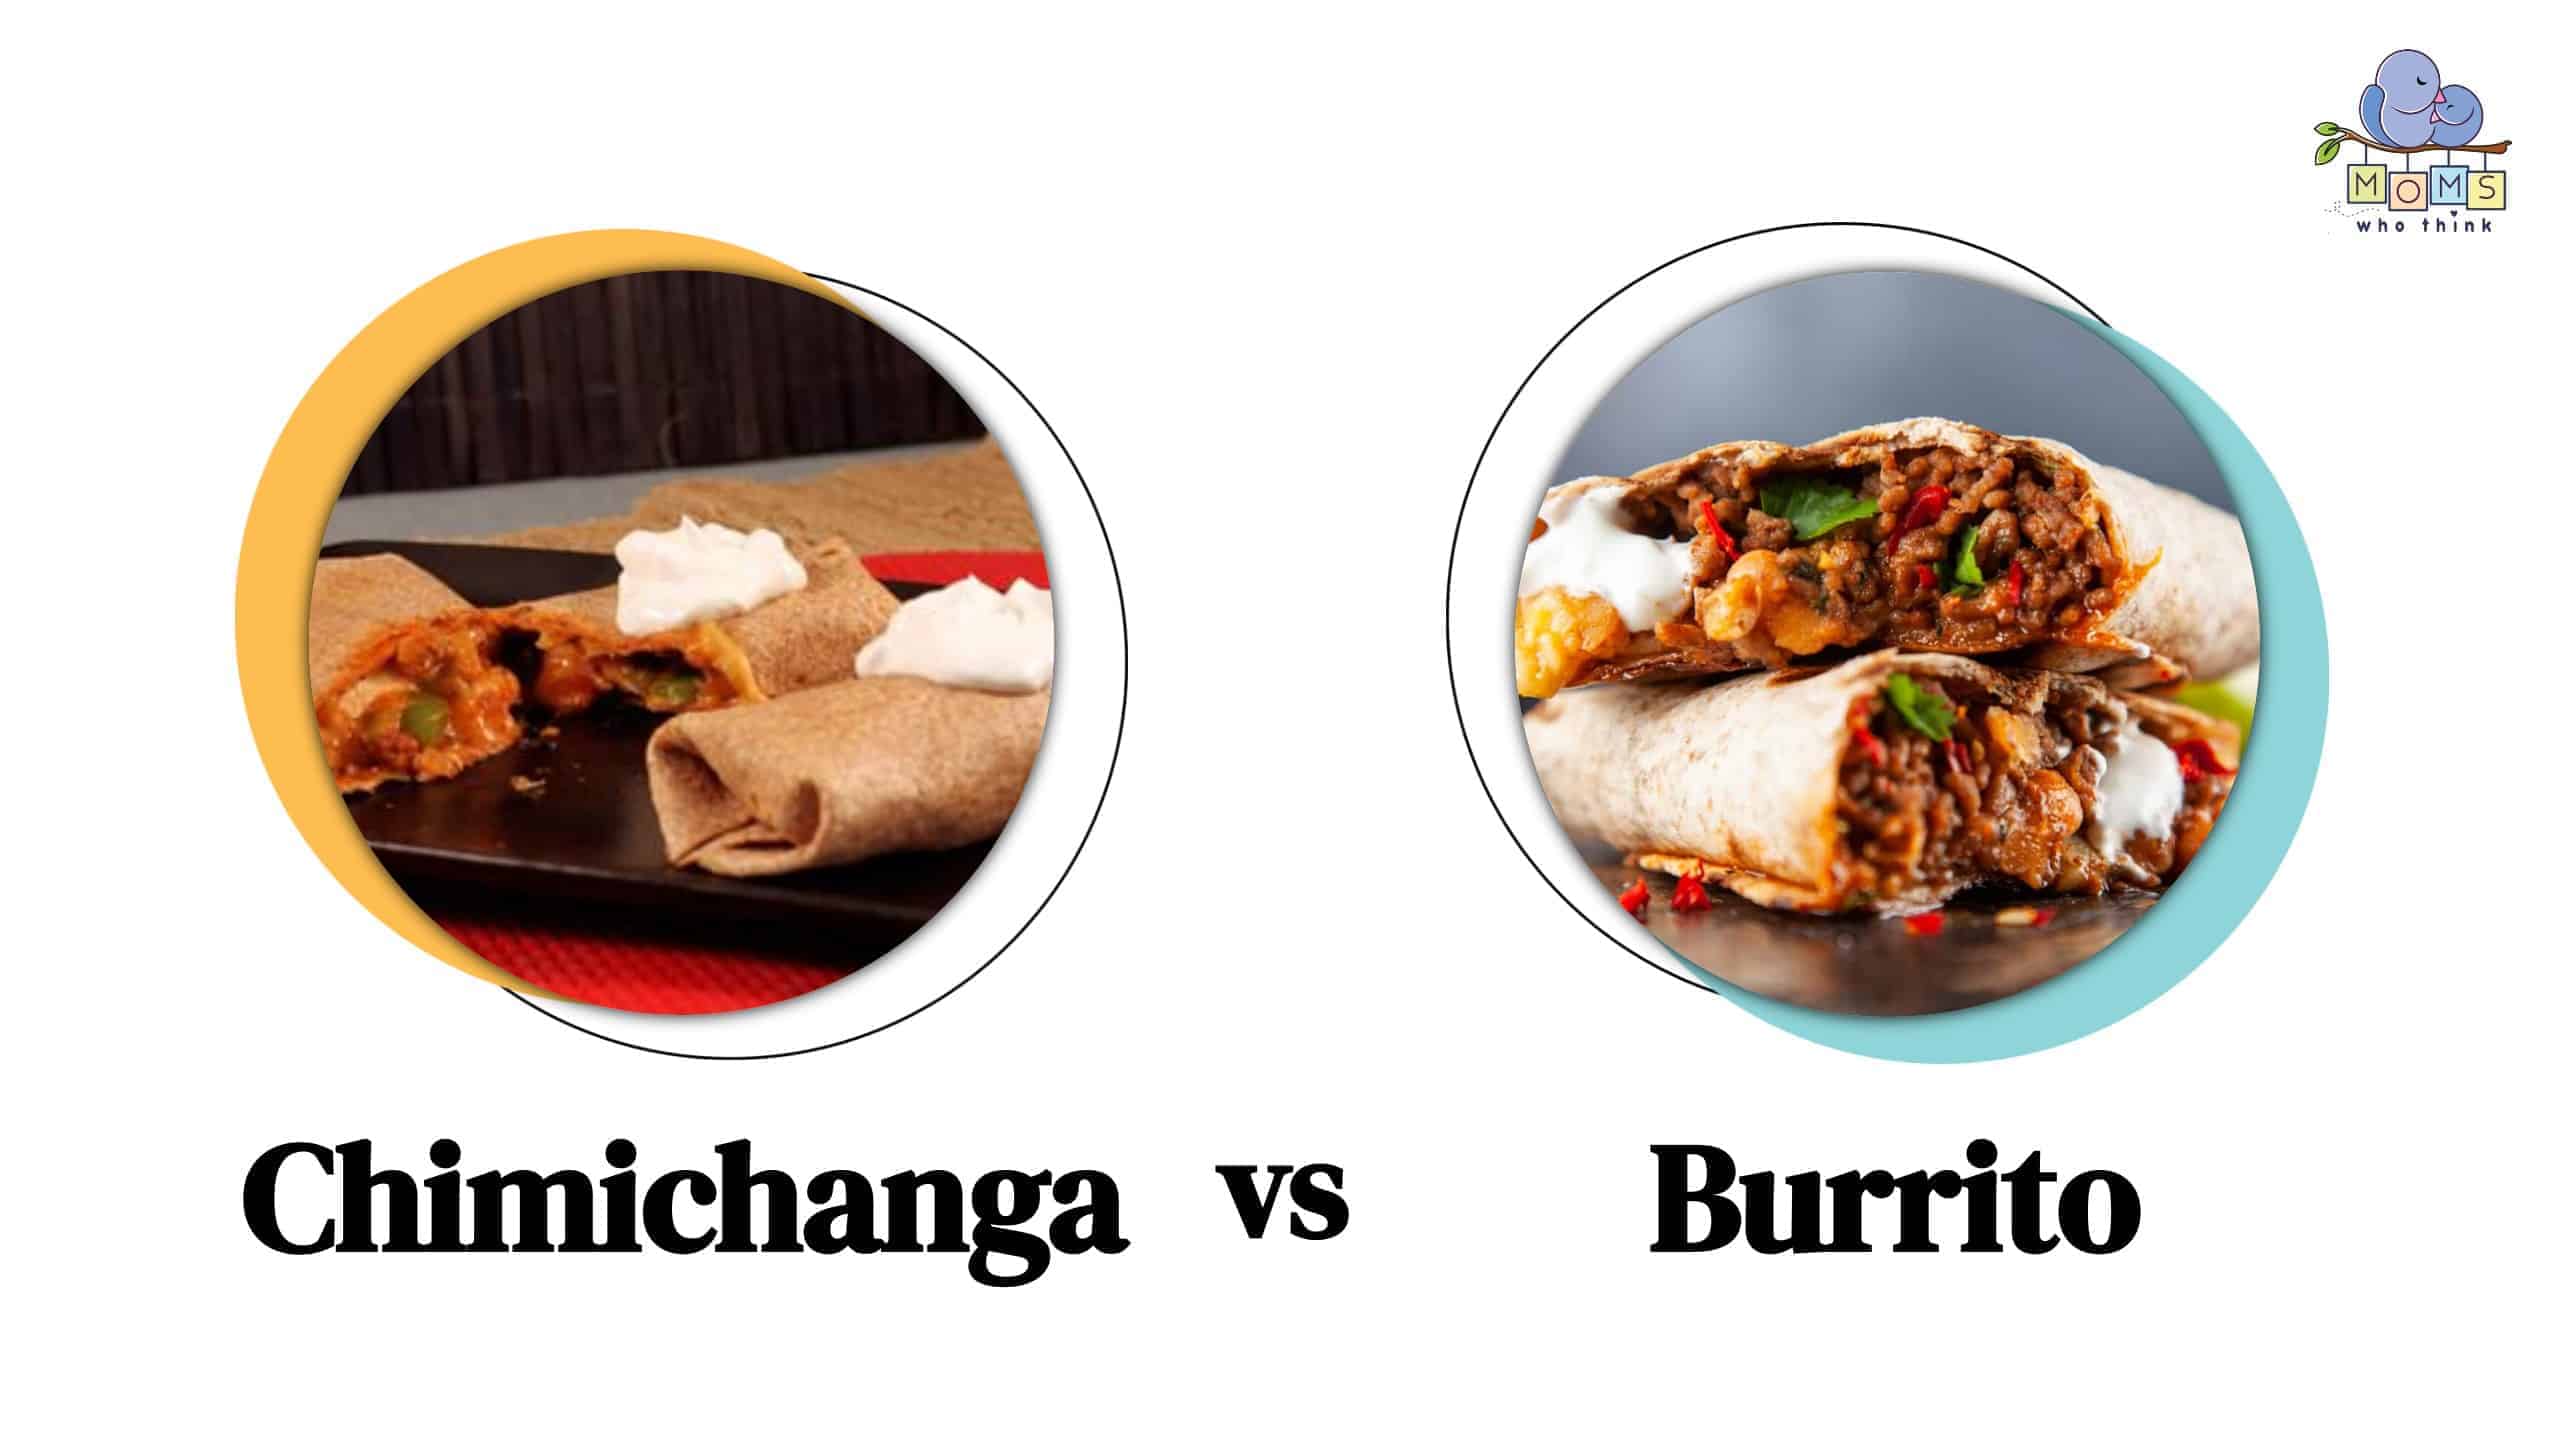 Chimichanga, Chimichanga is a deep-fried burrito that is po…